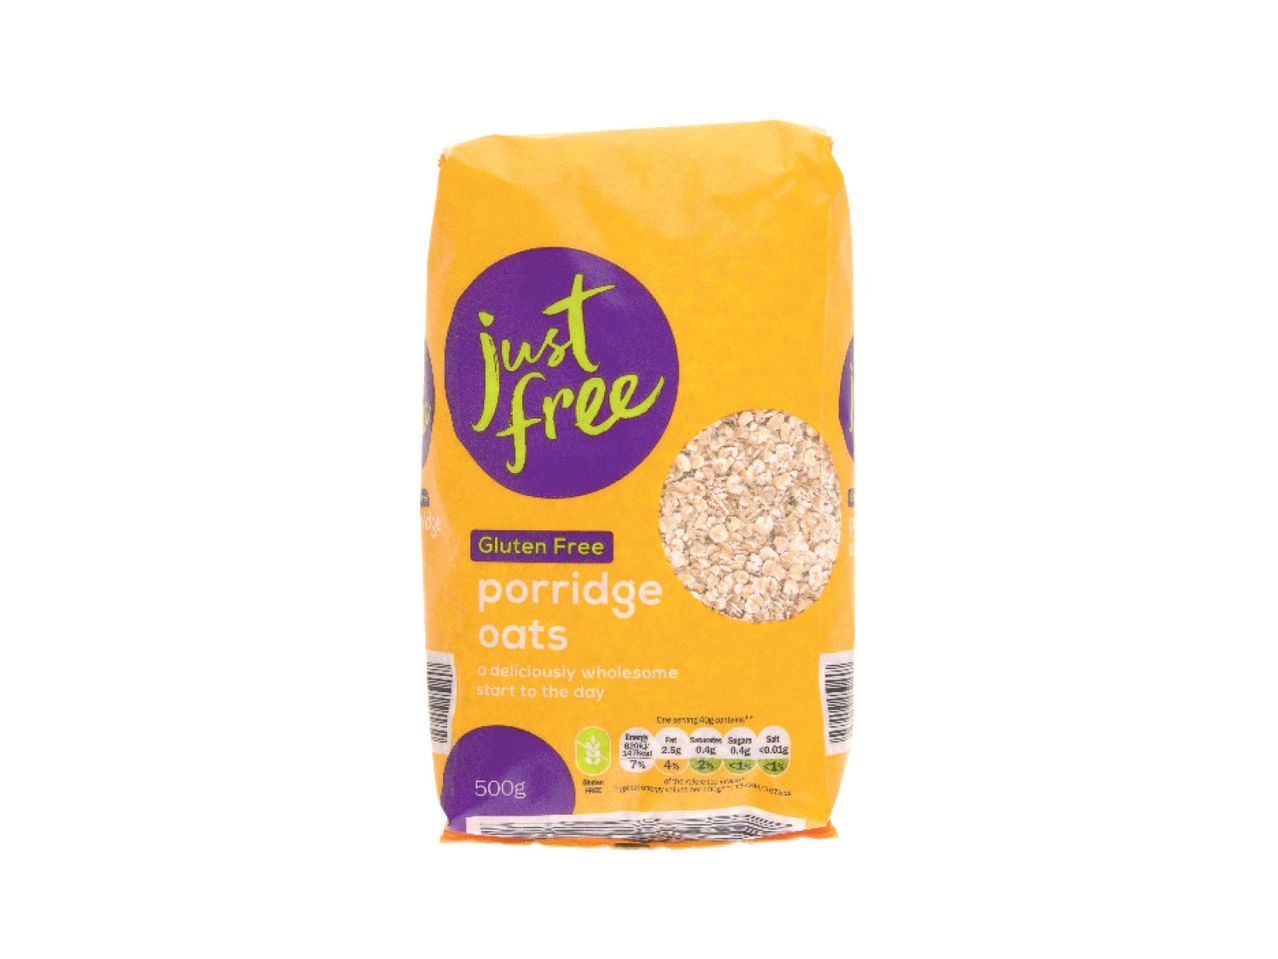 Go to full screen view: Gluten Free Porridge Oats - Image 1